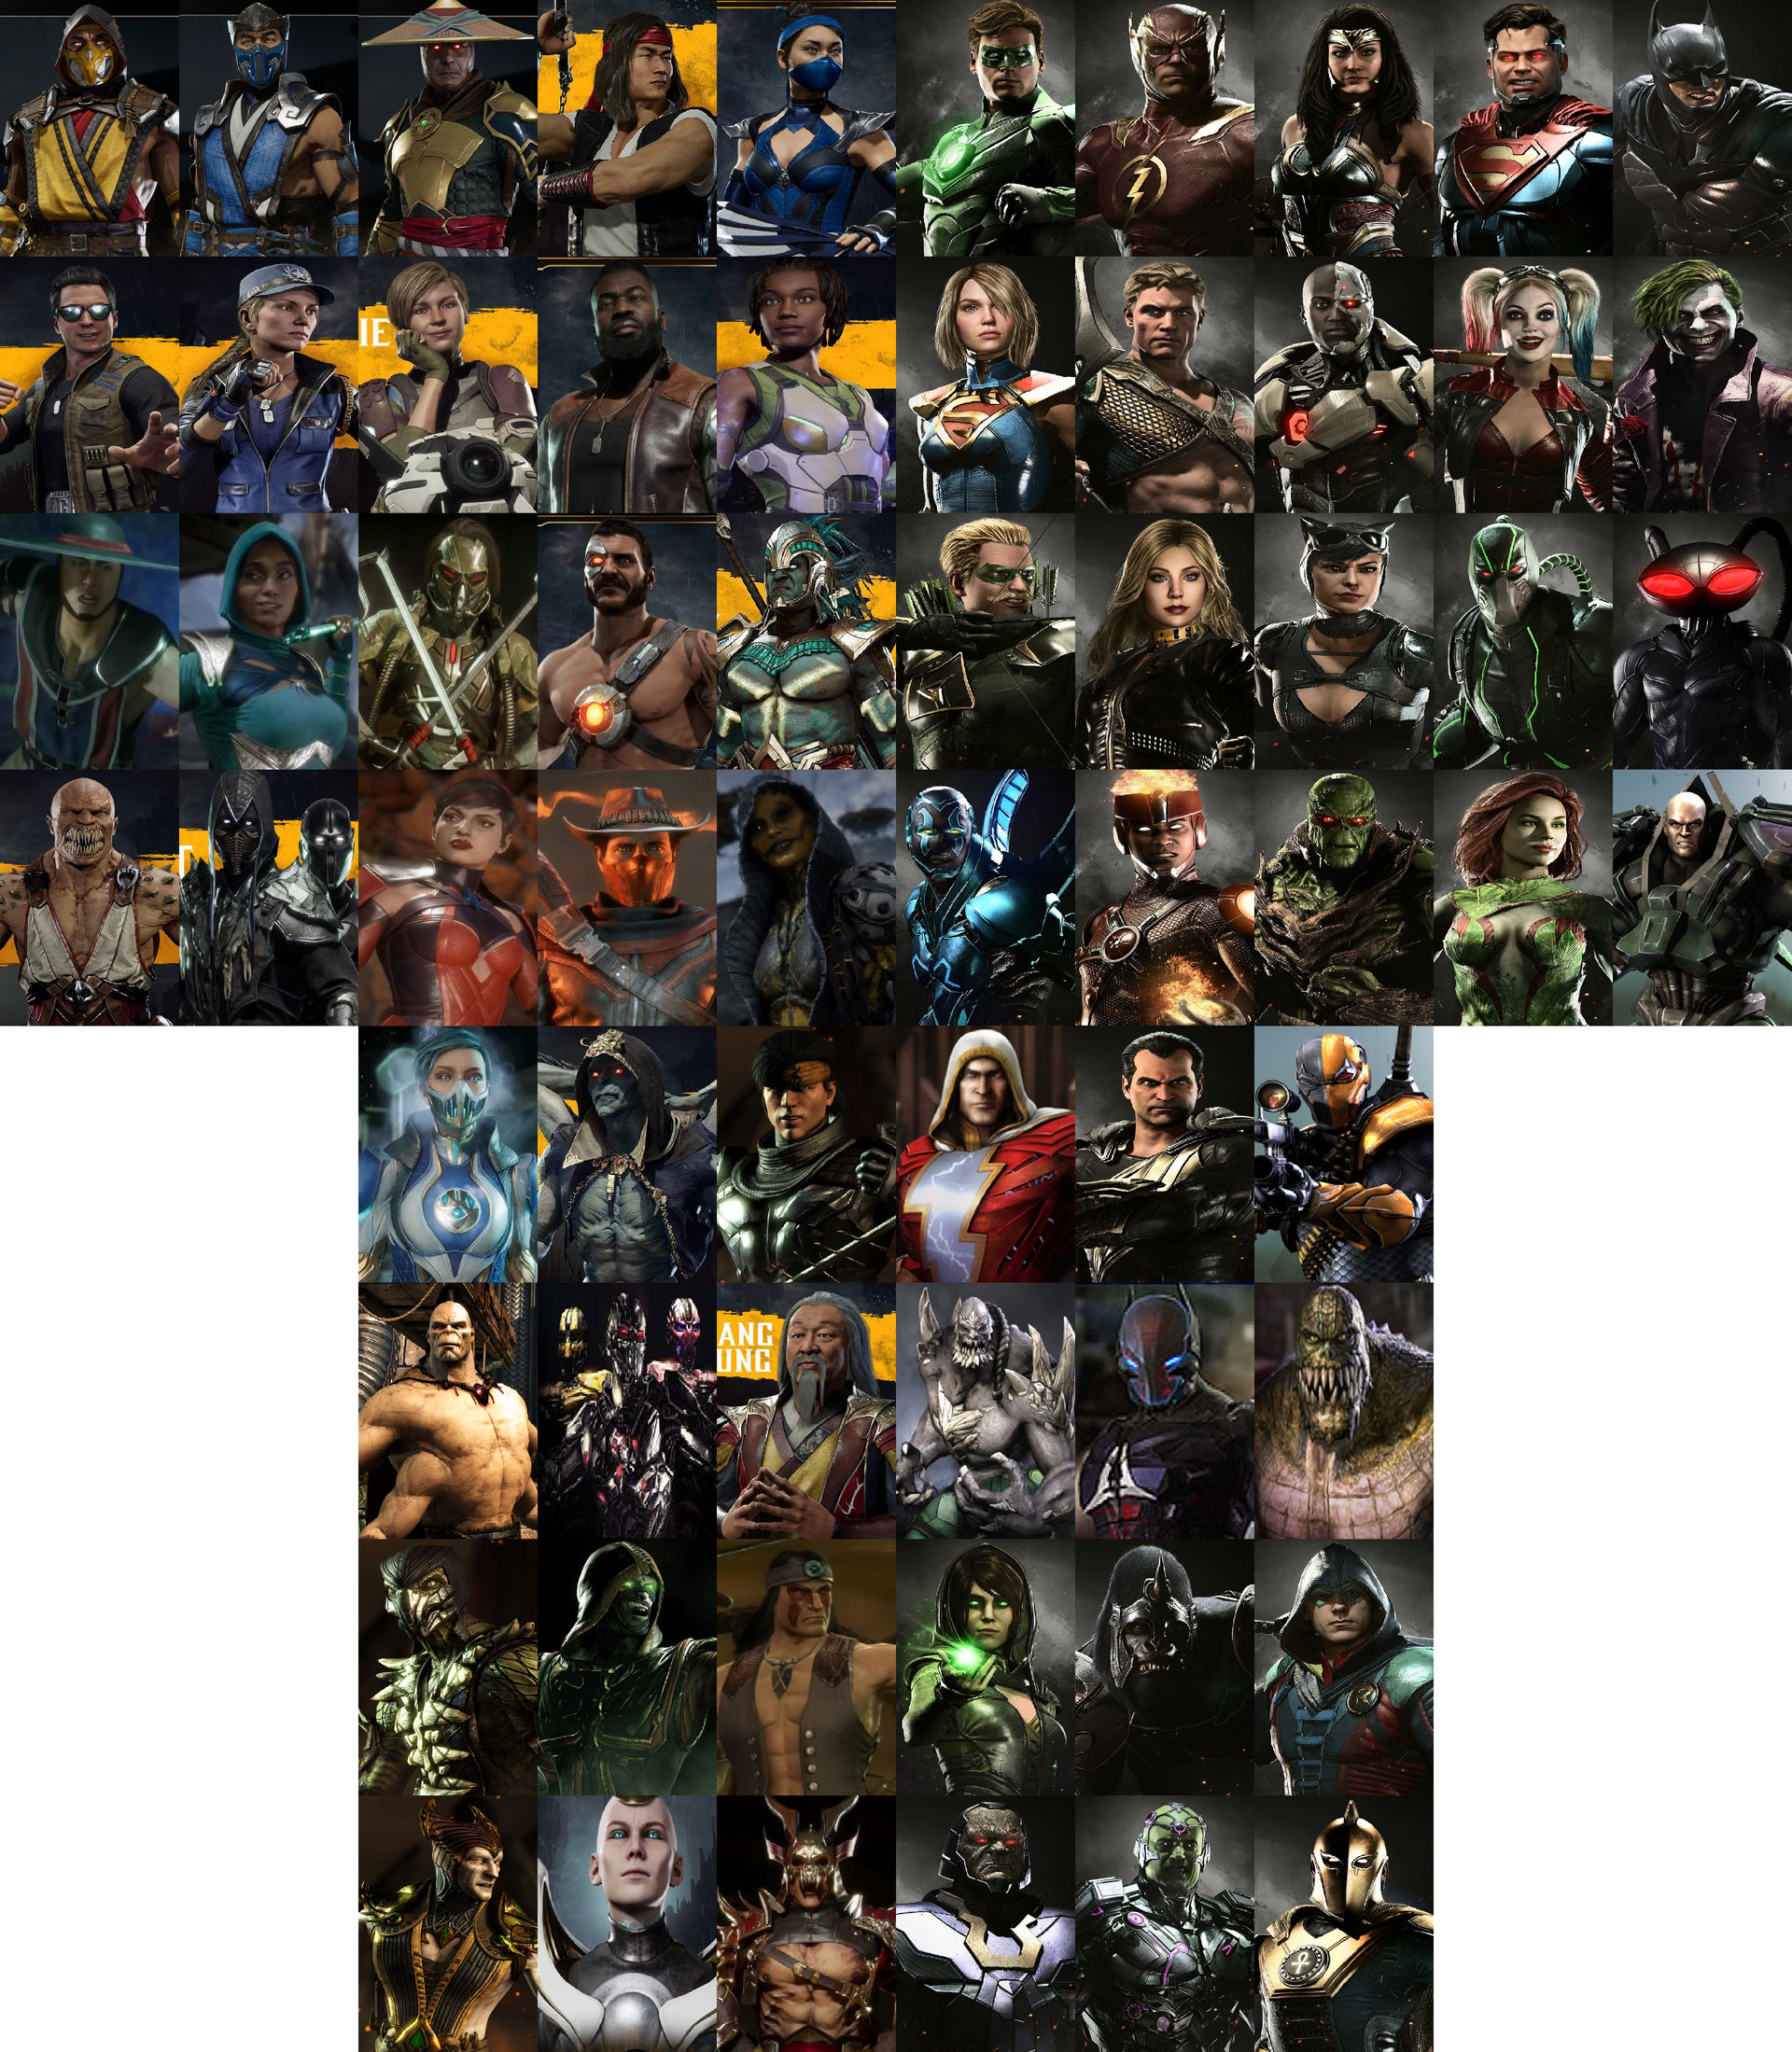 Mortal Kombat X Characters by MnstrFrc on DeviantArt